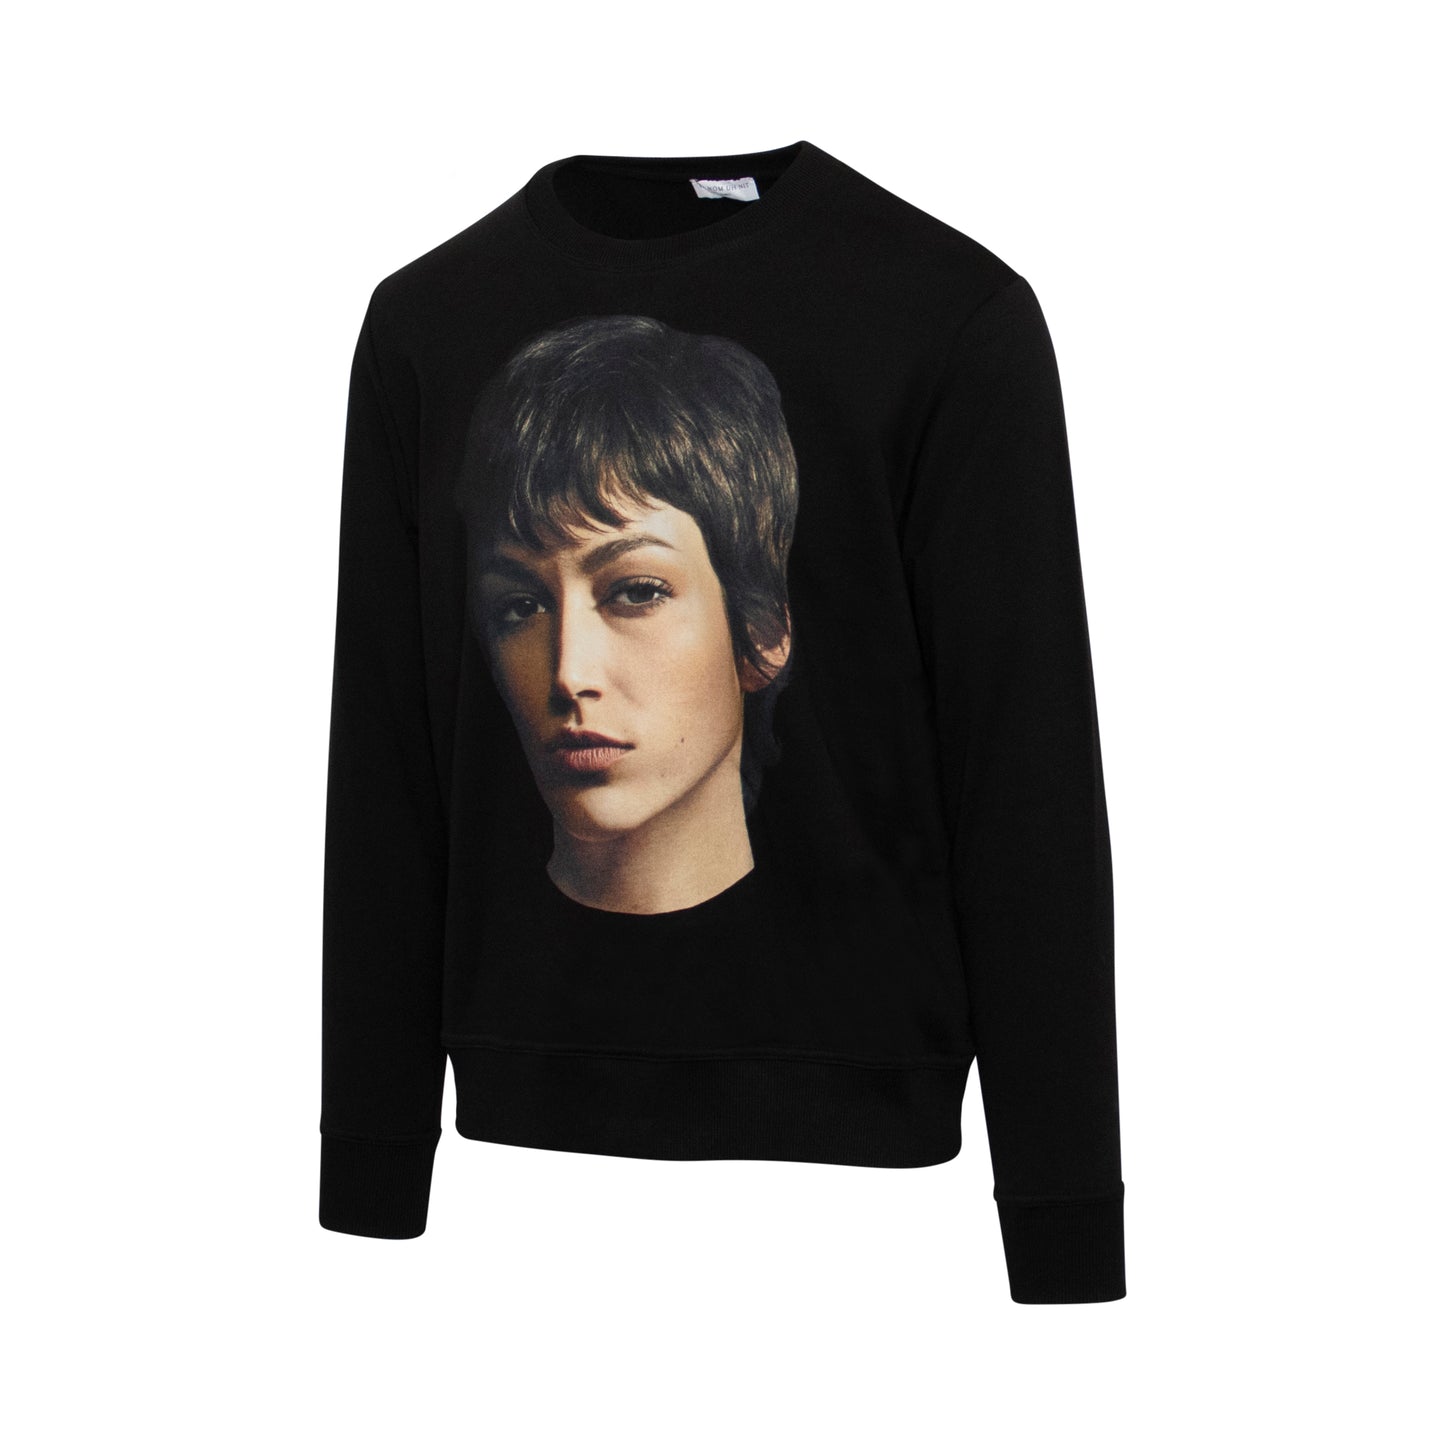 Tokyo Face Sweatshirt in Black